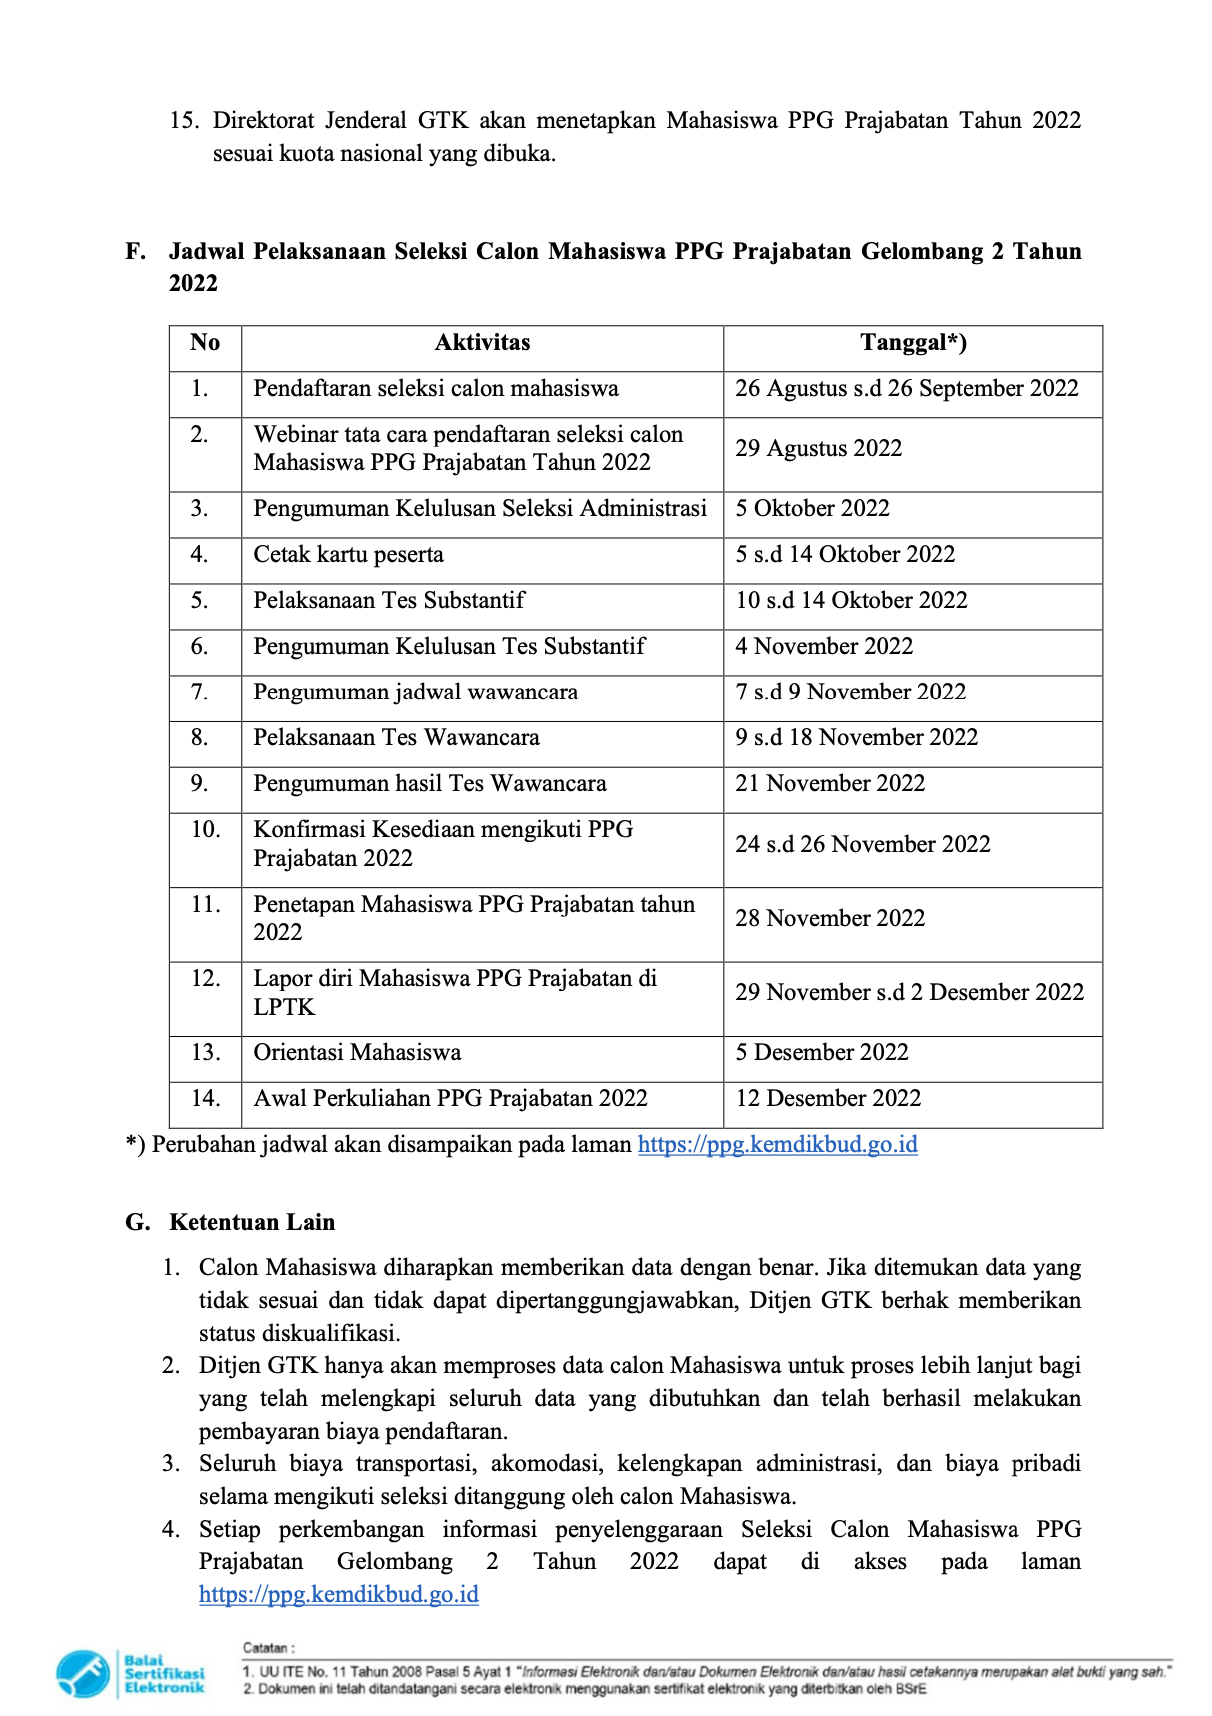 surat Pelaksanaan PPG Prajabatan Tahun 2022 Tahap II